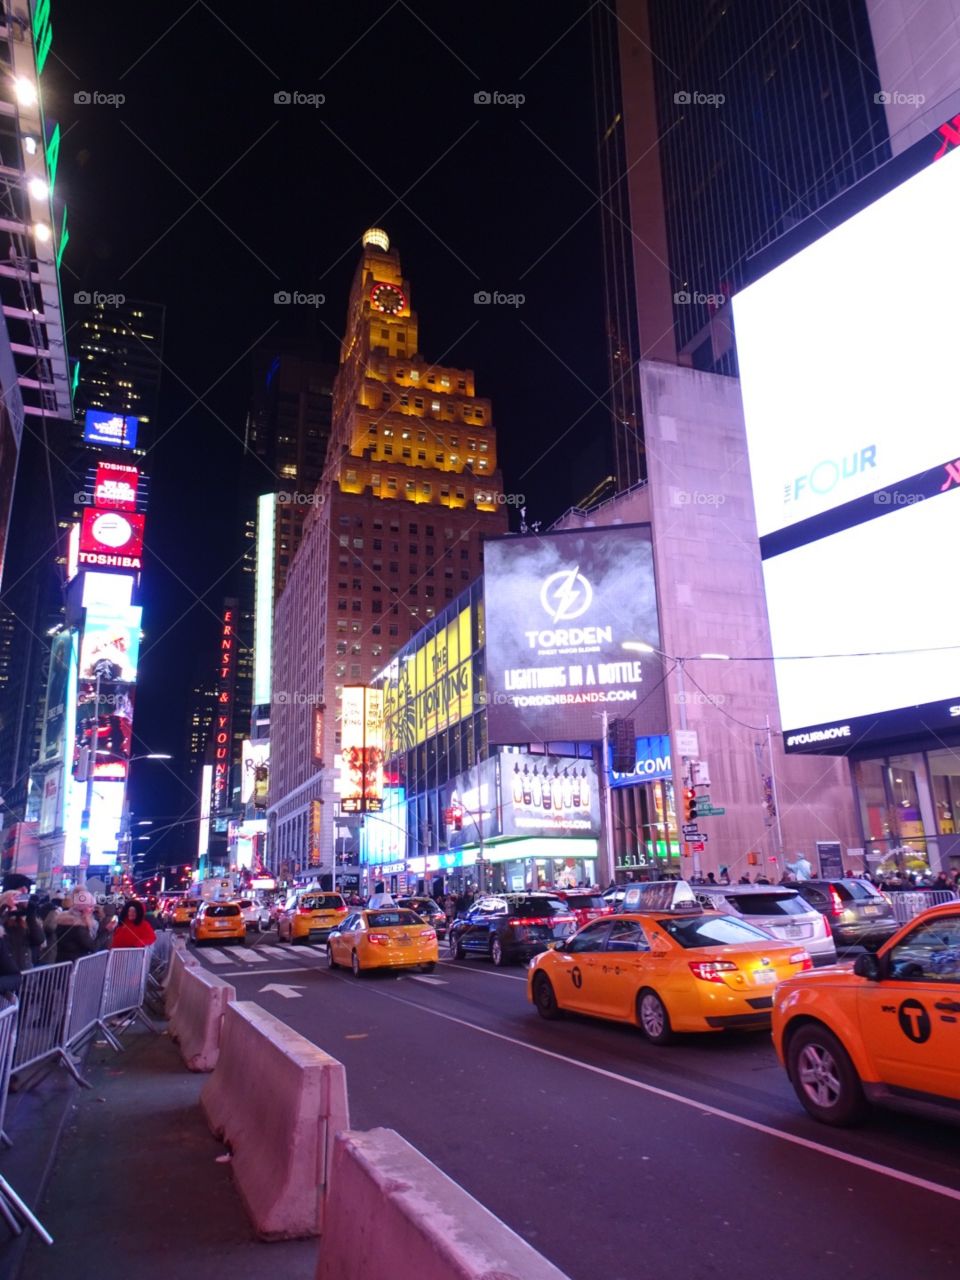 Times Square street scene